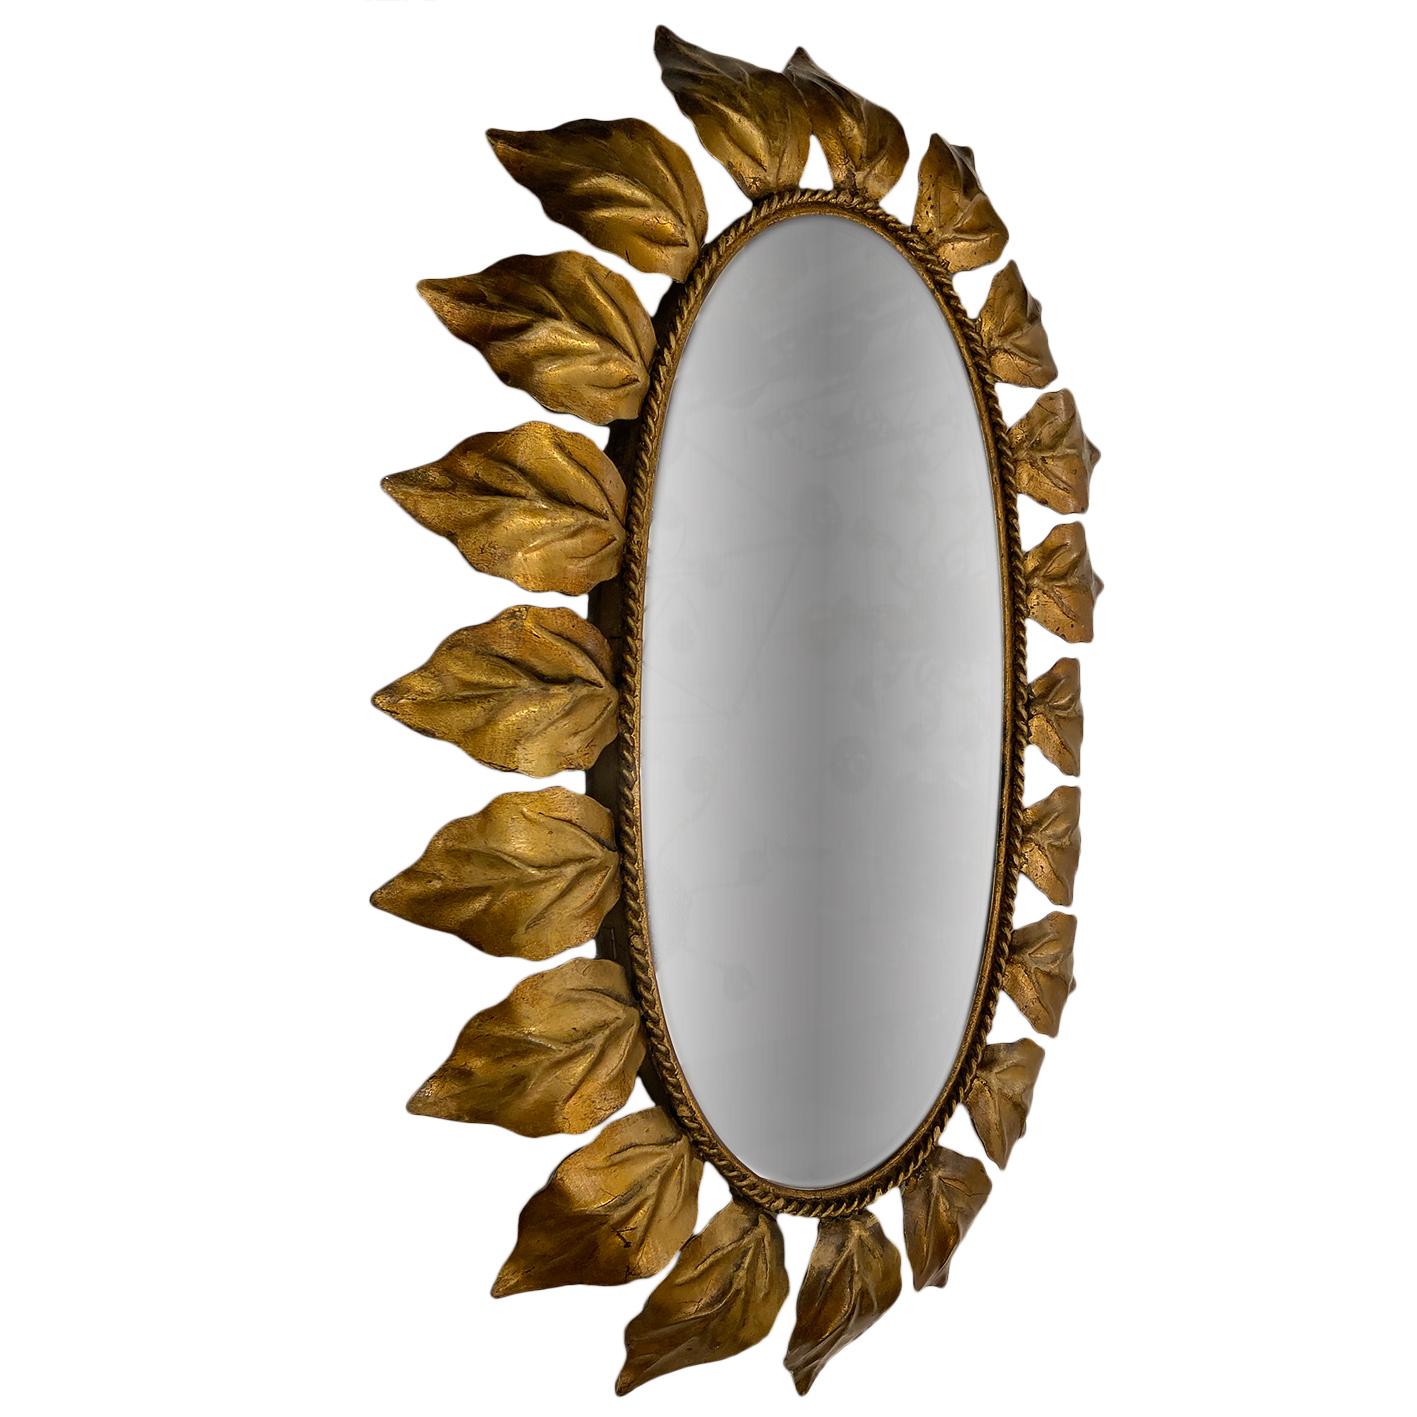 A circa 1950's Italian gilt metal sunburst mirror with original patina.

Measurements:
Height: 22